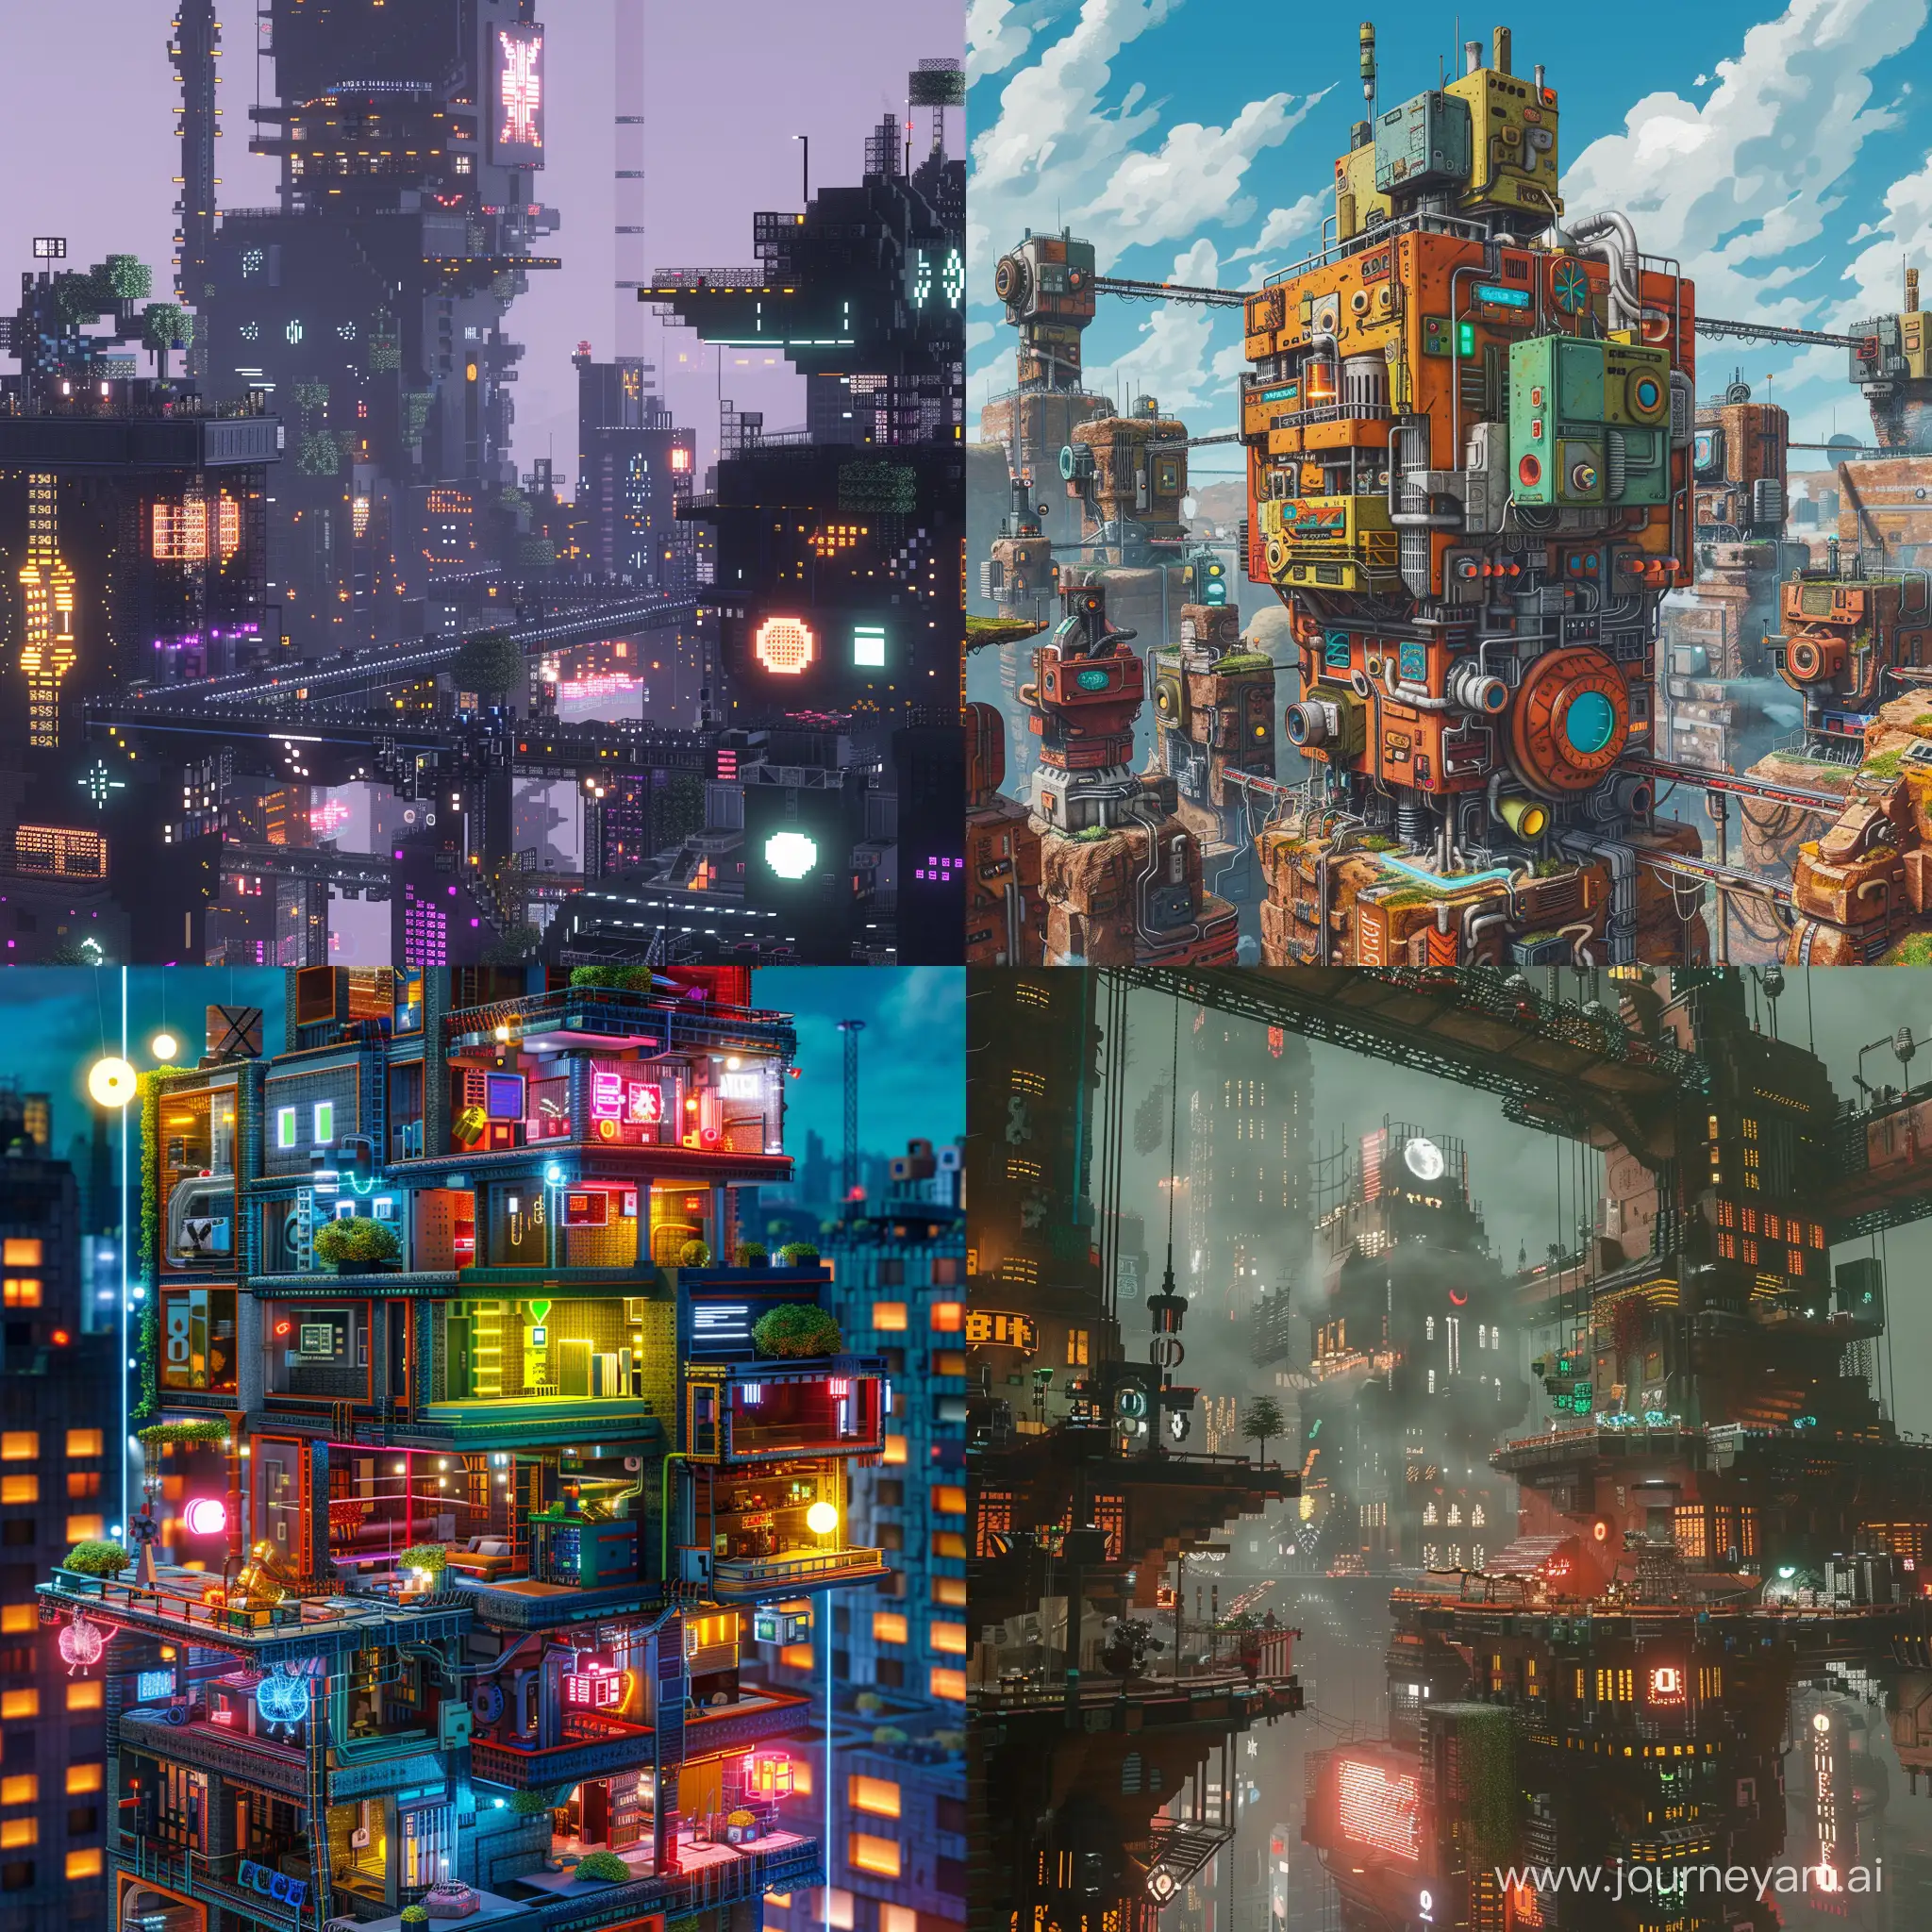 Futuristic-Cyberpunk-Cityscape-at-Night